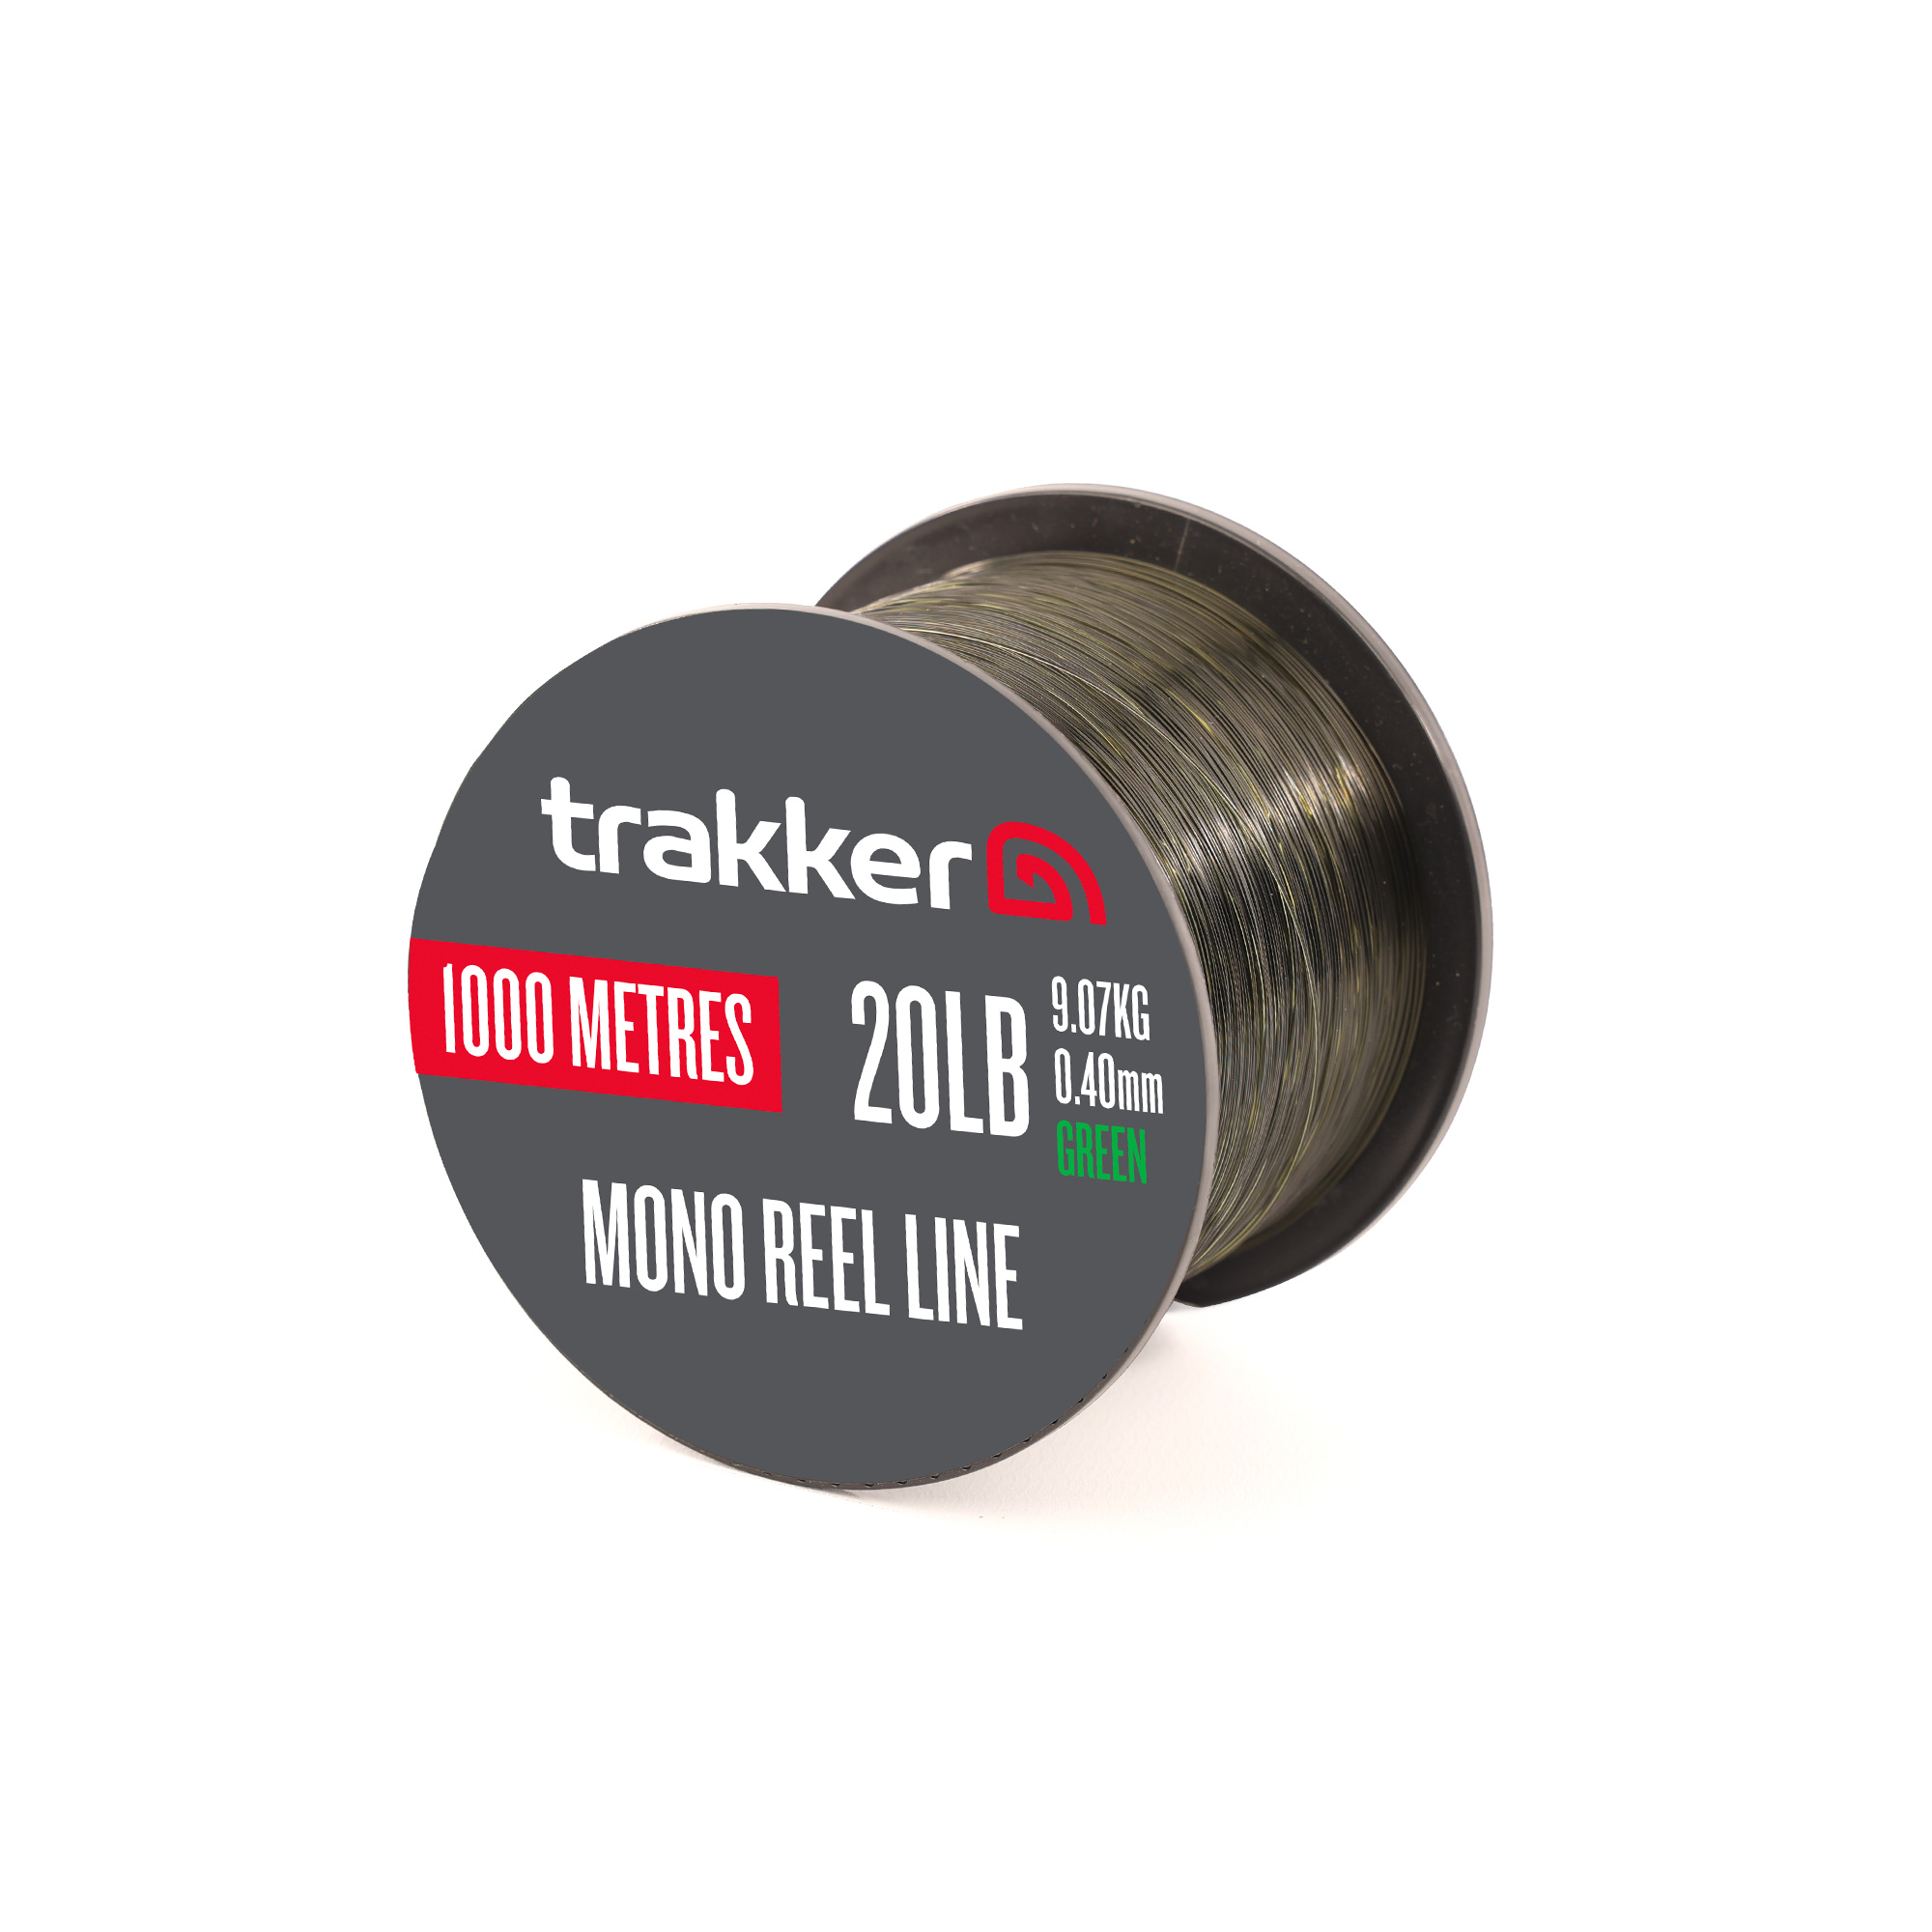 Trakker – Mono Reel Line (20lb)(9.07kg)(0.40mm)(1000m)